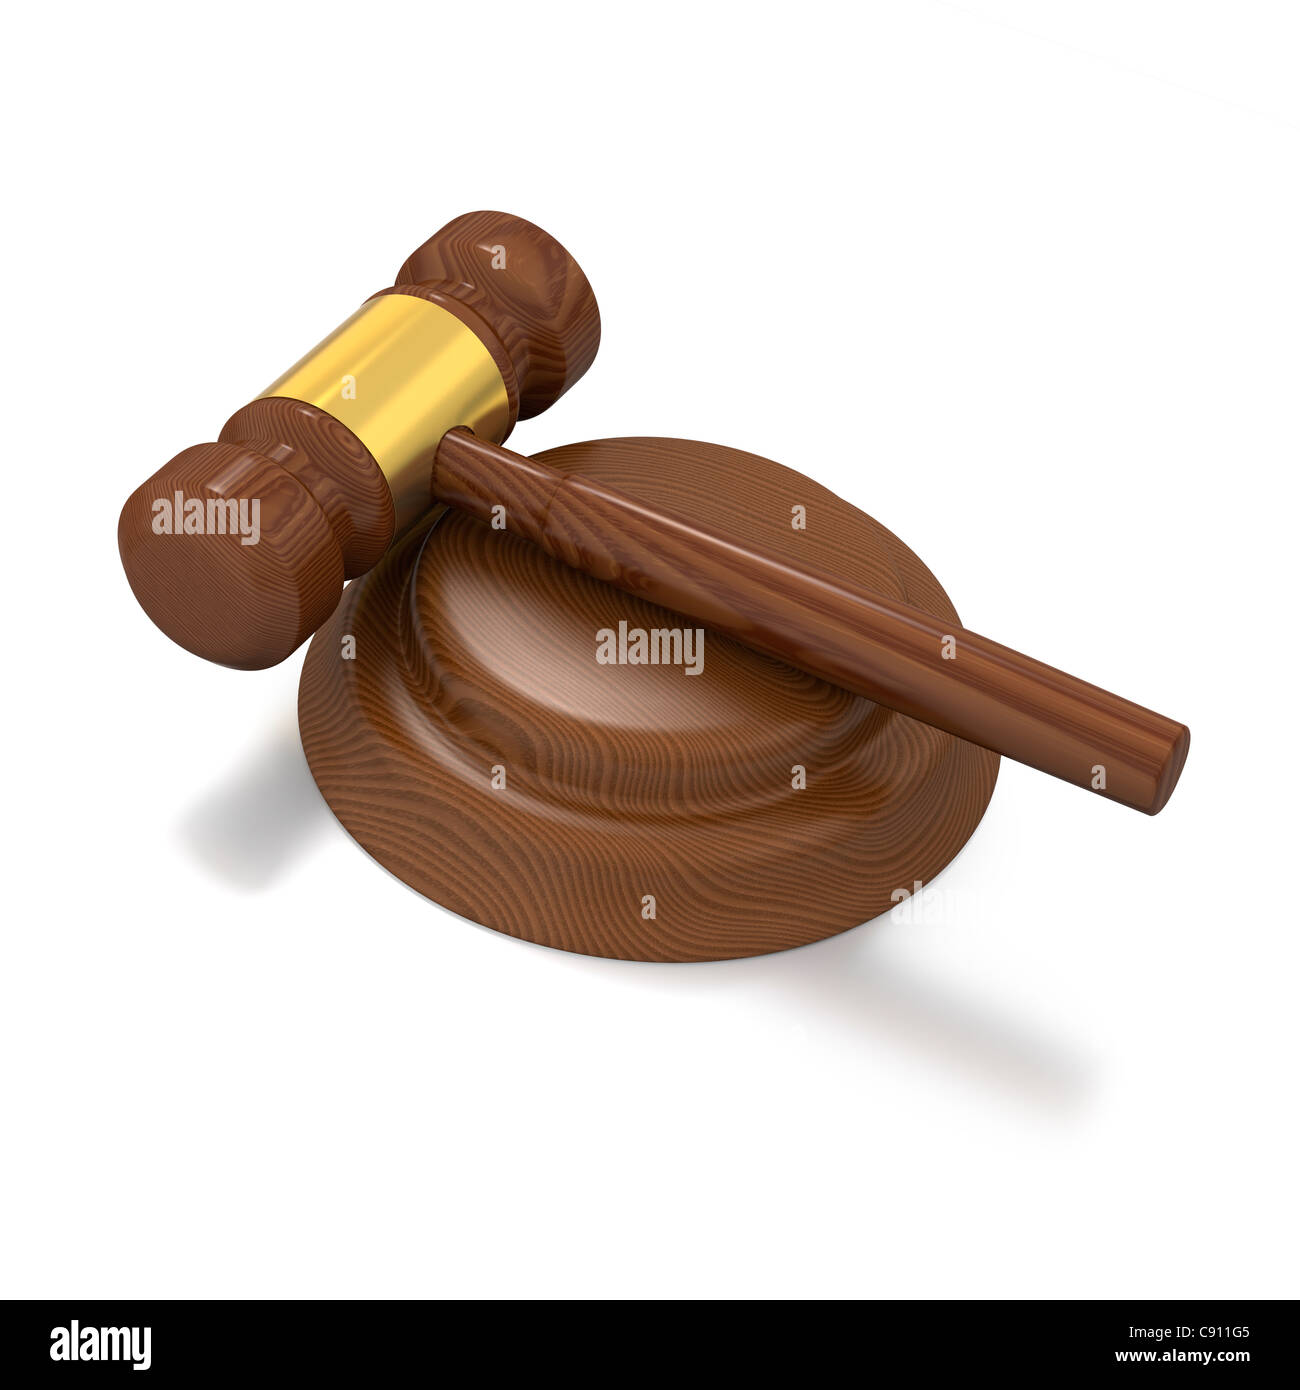 Judge's gavel made of wood on white background Stock Photo